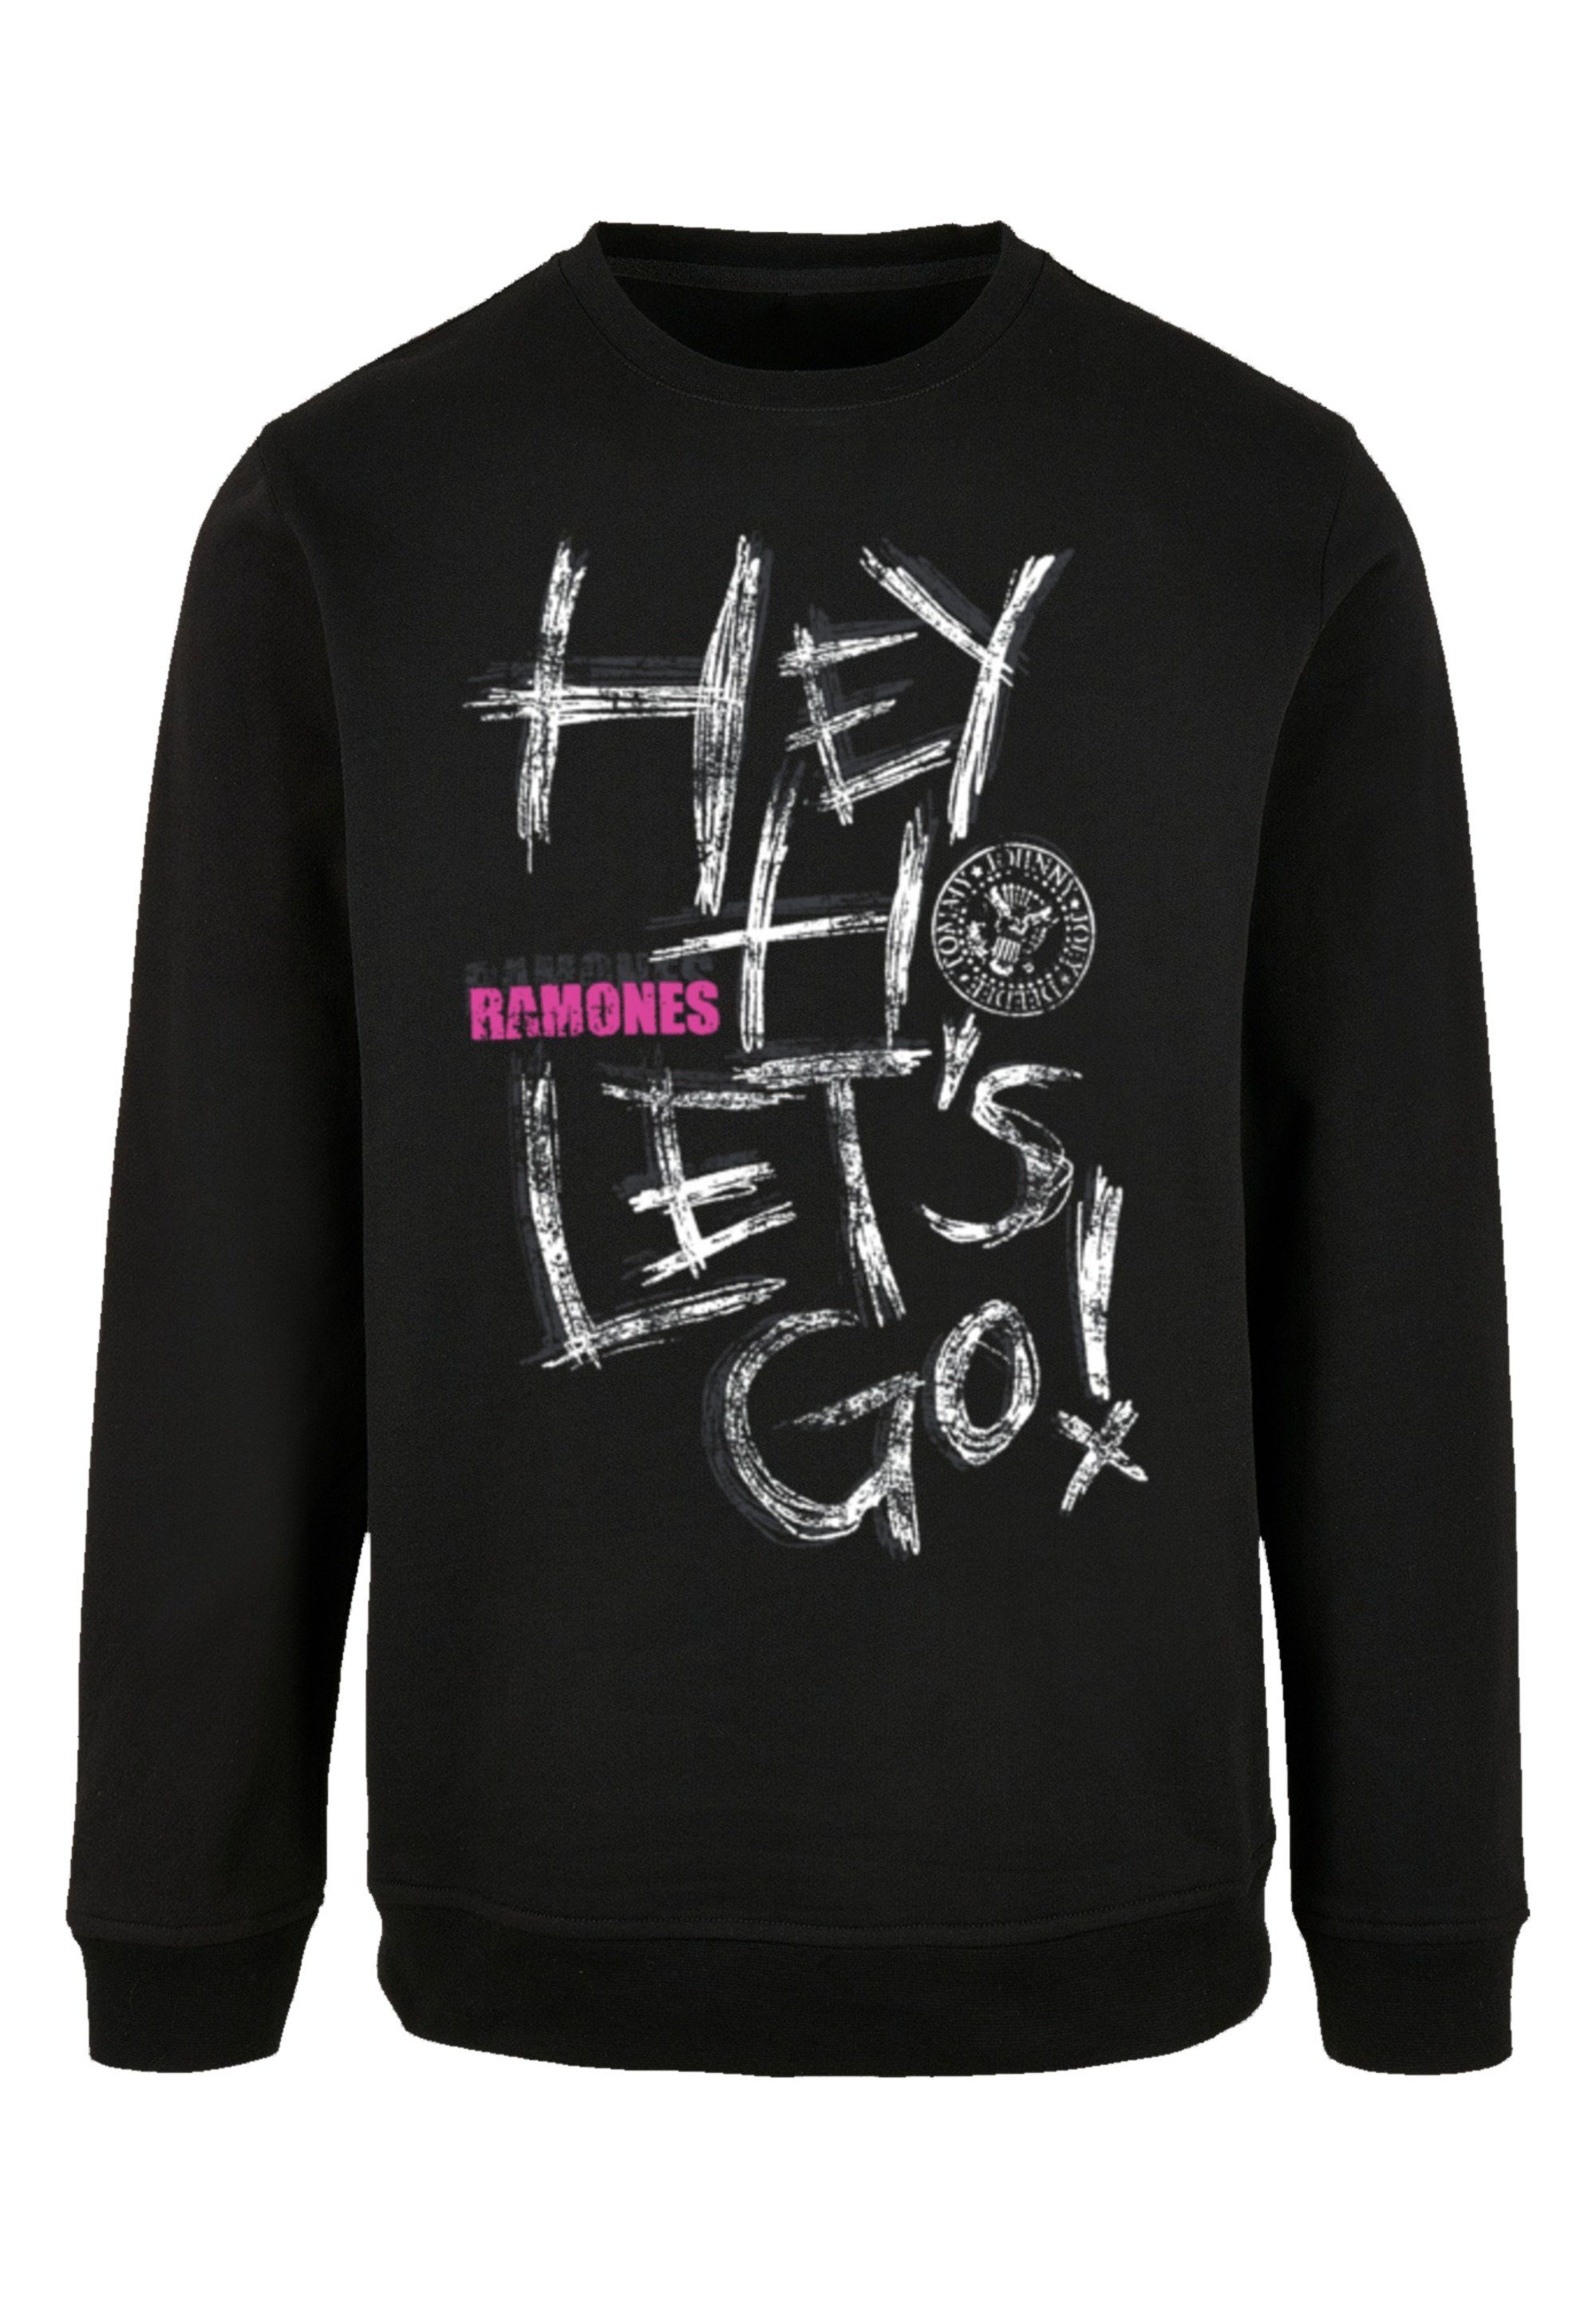 F4NT4STIC Sweatshirt Ramones Hey Rock Band Band, Qualität, Rock-Musik Premium Ho Musik Go Let's